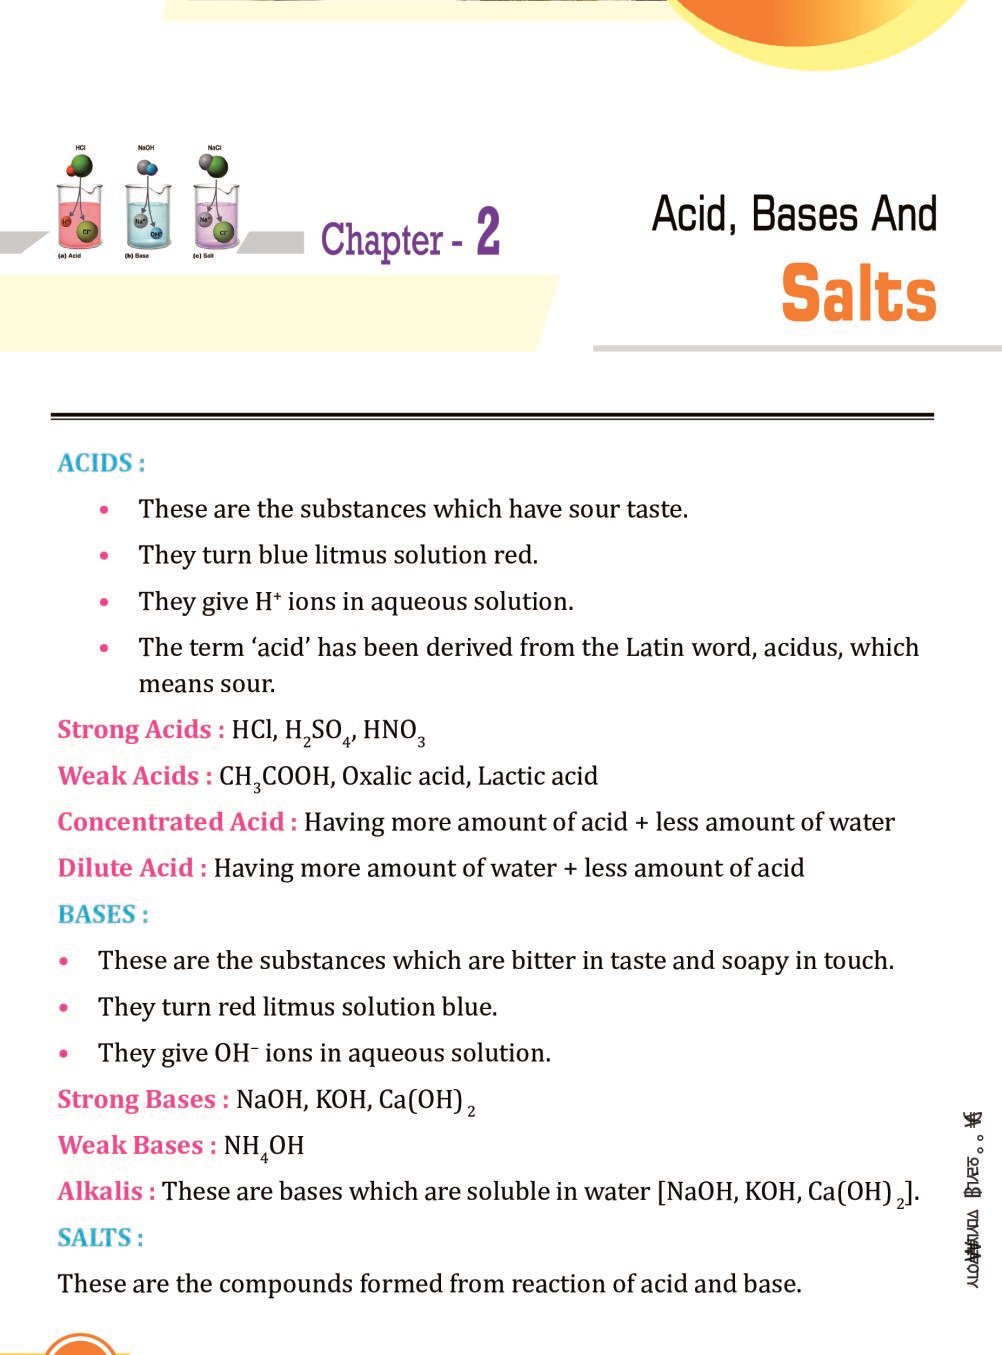 Acids and bases pdf download free version of adobe pdf reader